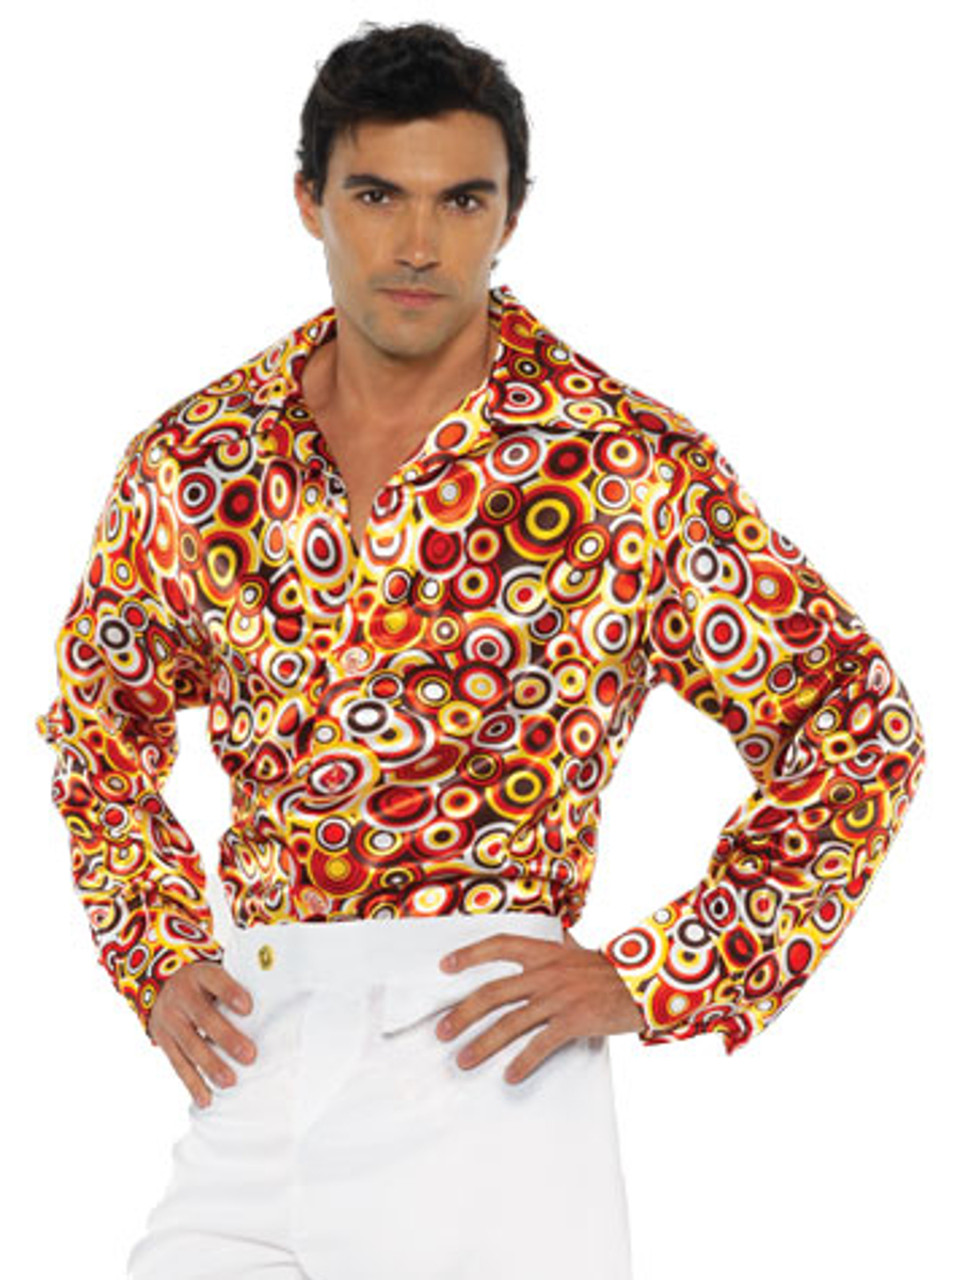  VIVICOLOR Mens 70s Disco Costume Disco Shirt Outfit